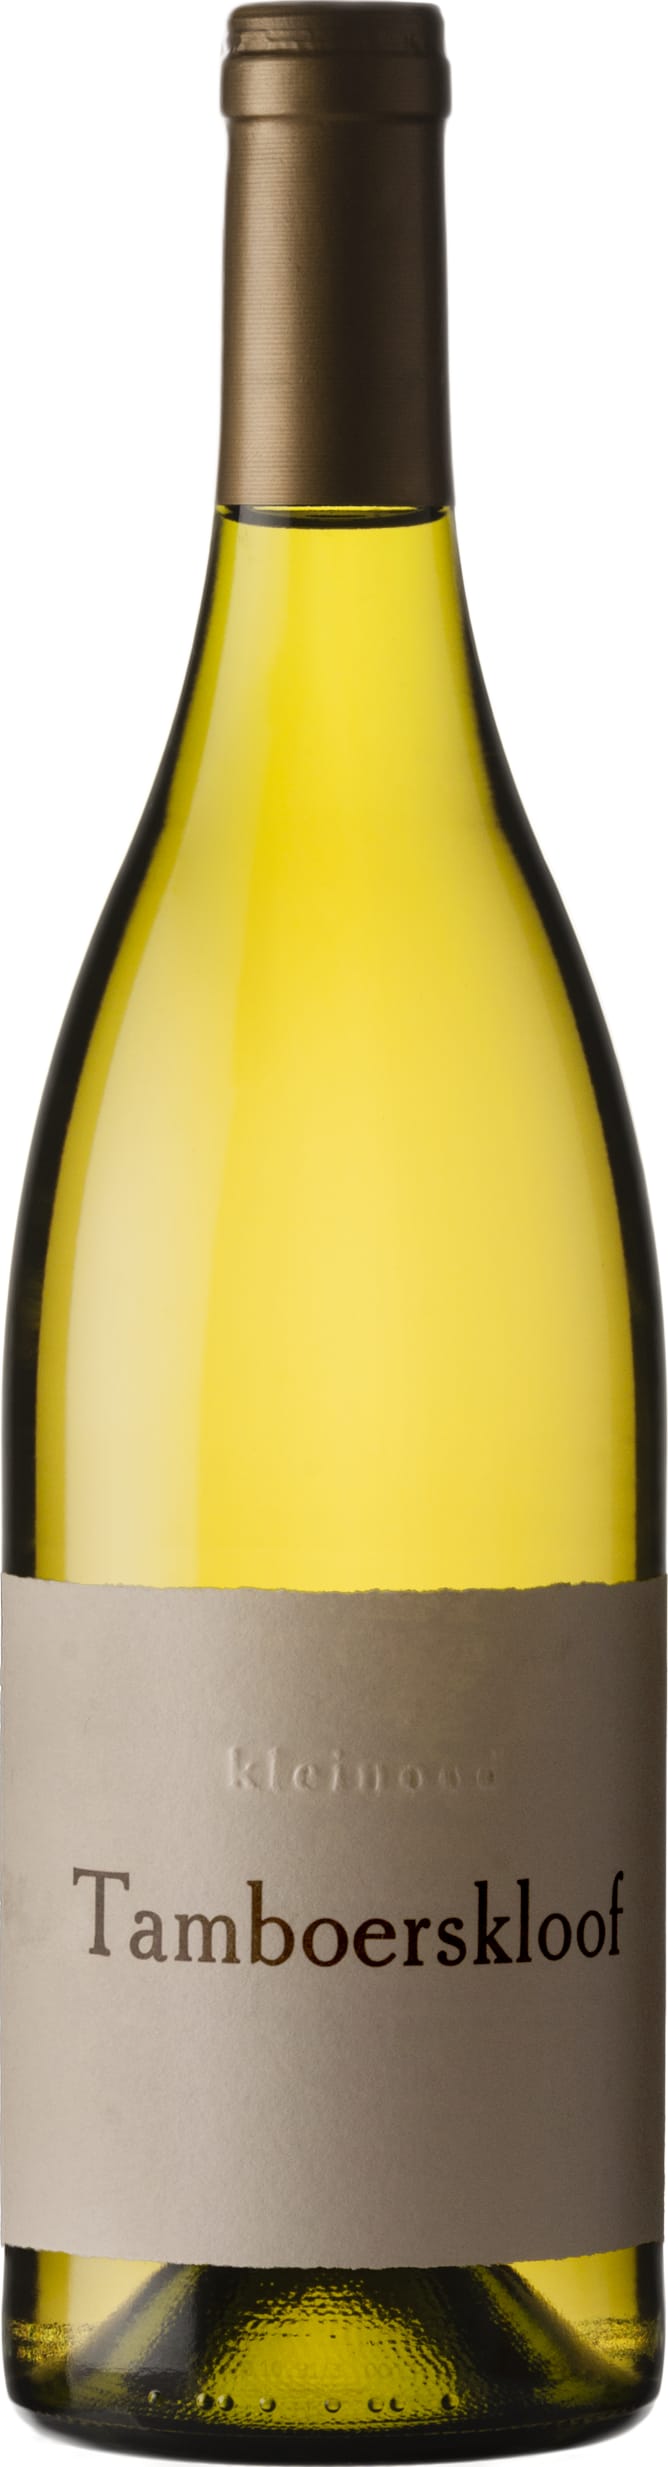 Kleinood Tamboerskloof Viognier 2022 75cl - Buy Kleinood Wines from GREAT WINES DIRECT wine shop